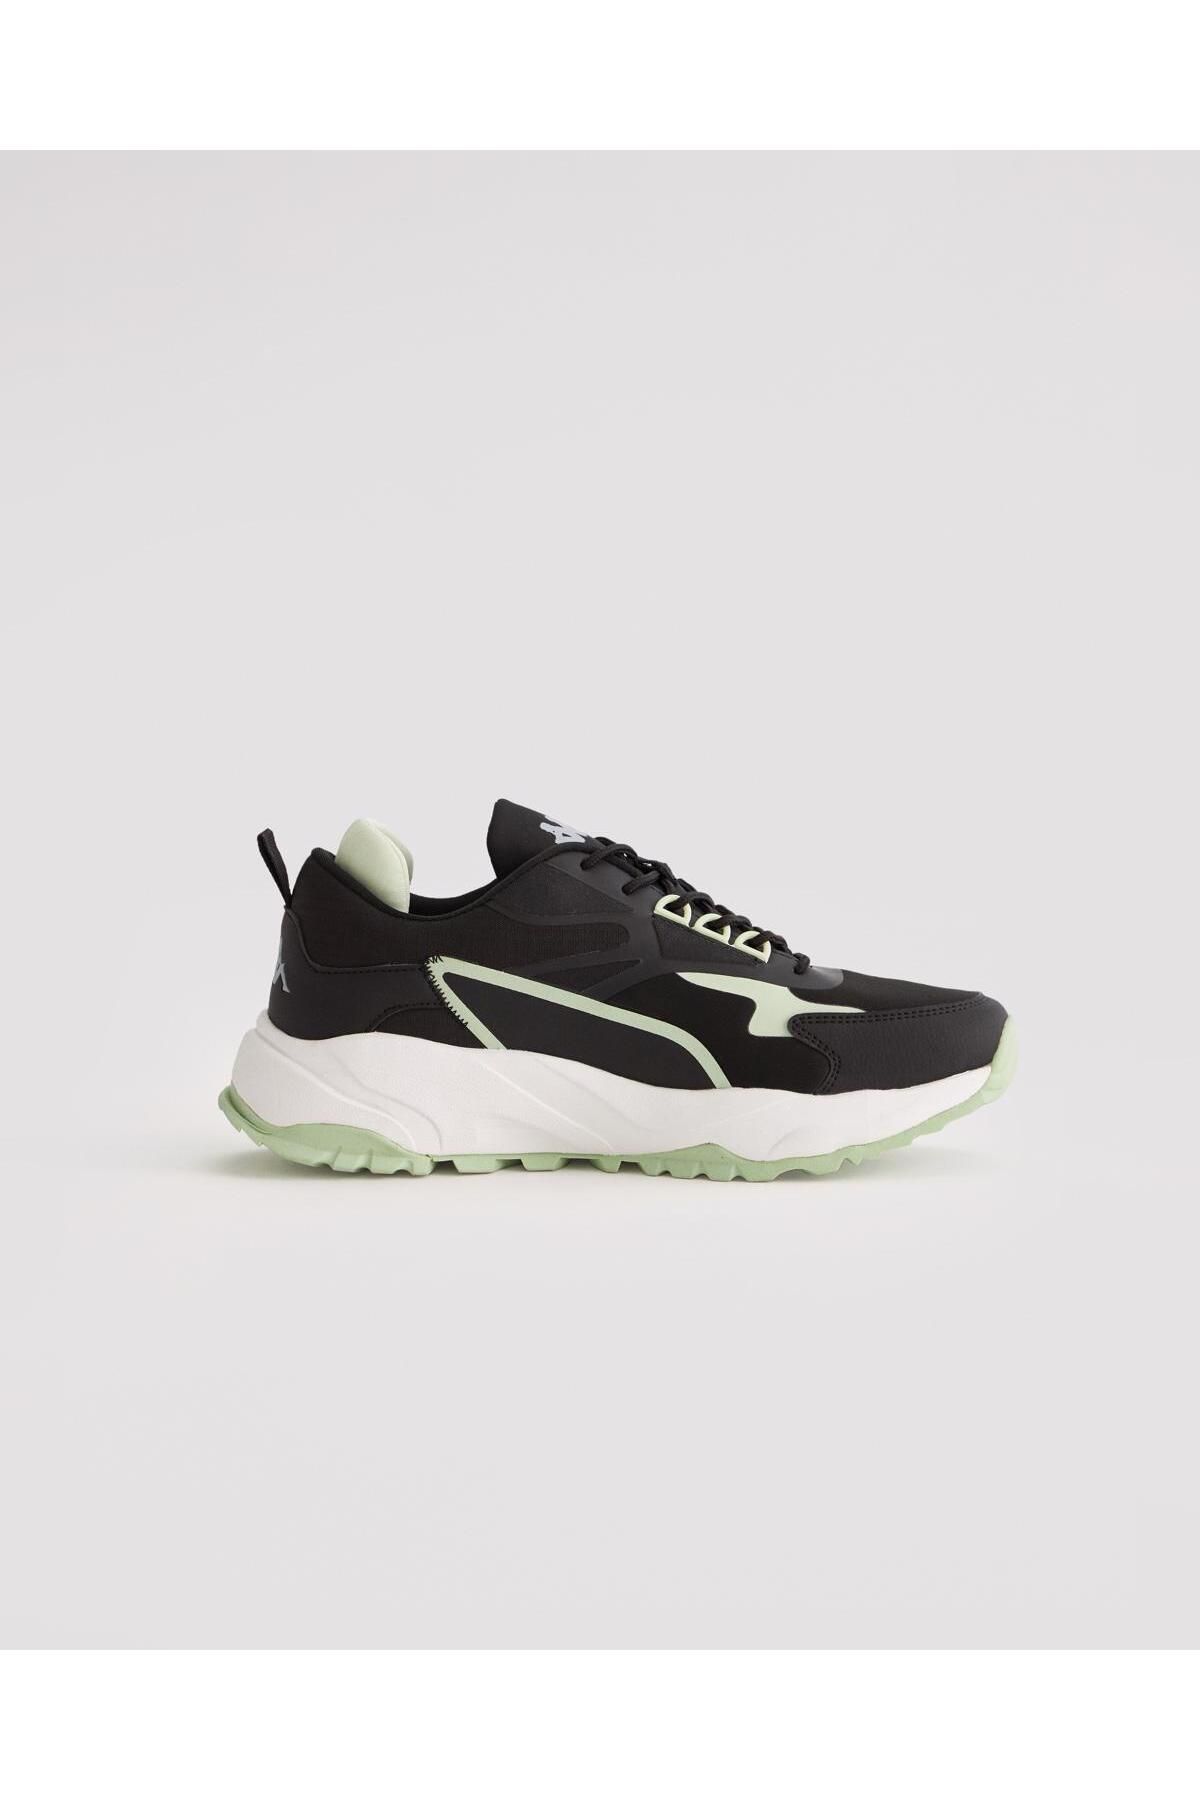 Kappa Authentic Altin 3 Unisex Siyah-mint Yeşili Sneaker Fiyatı, Yorumları  - Trendyol